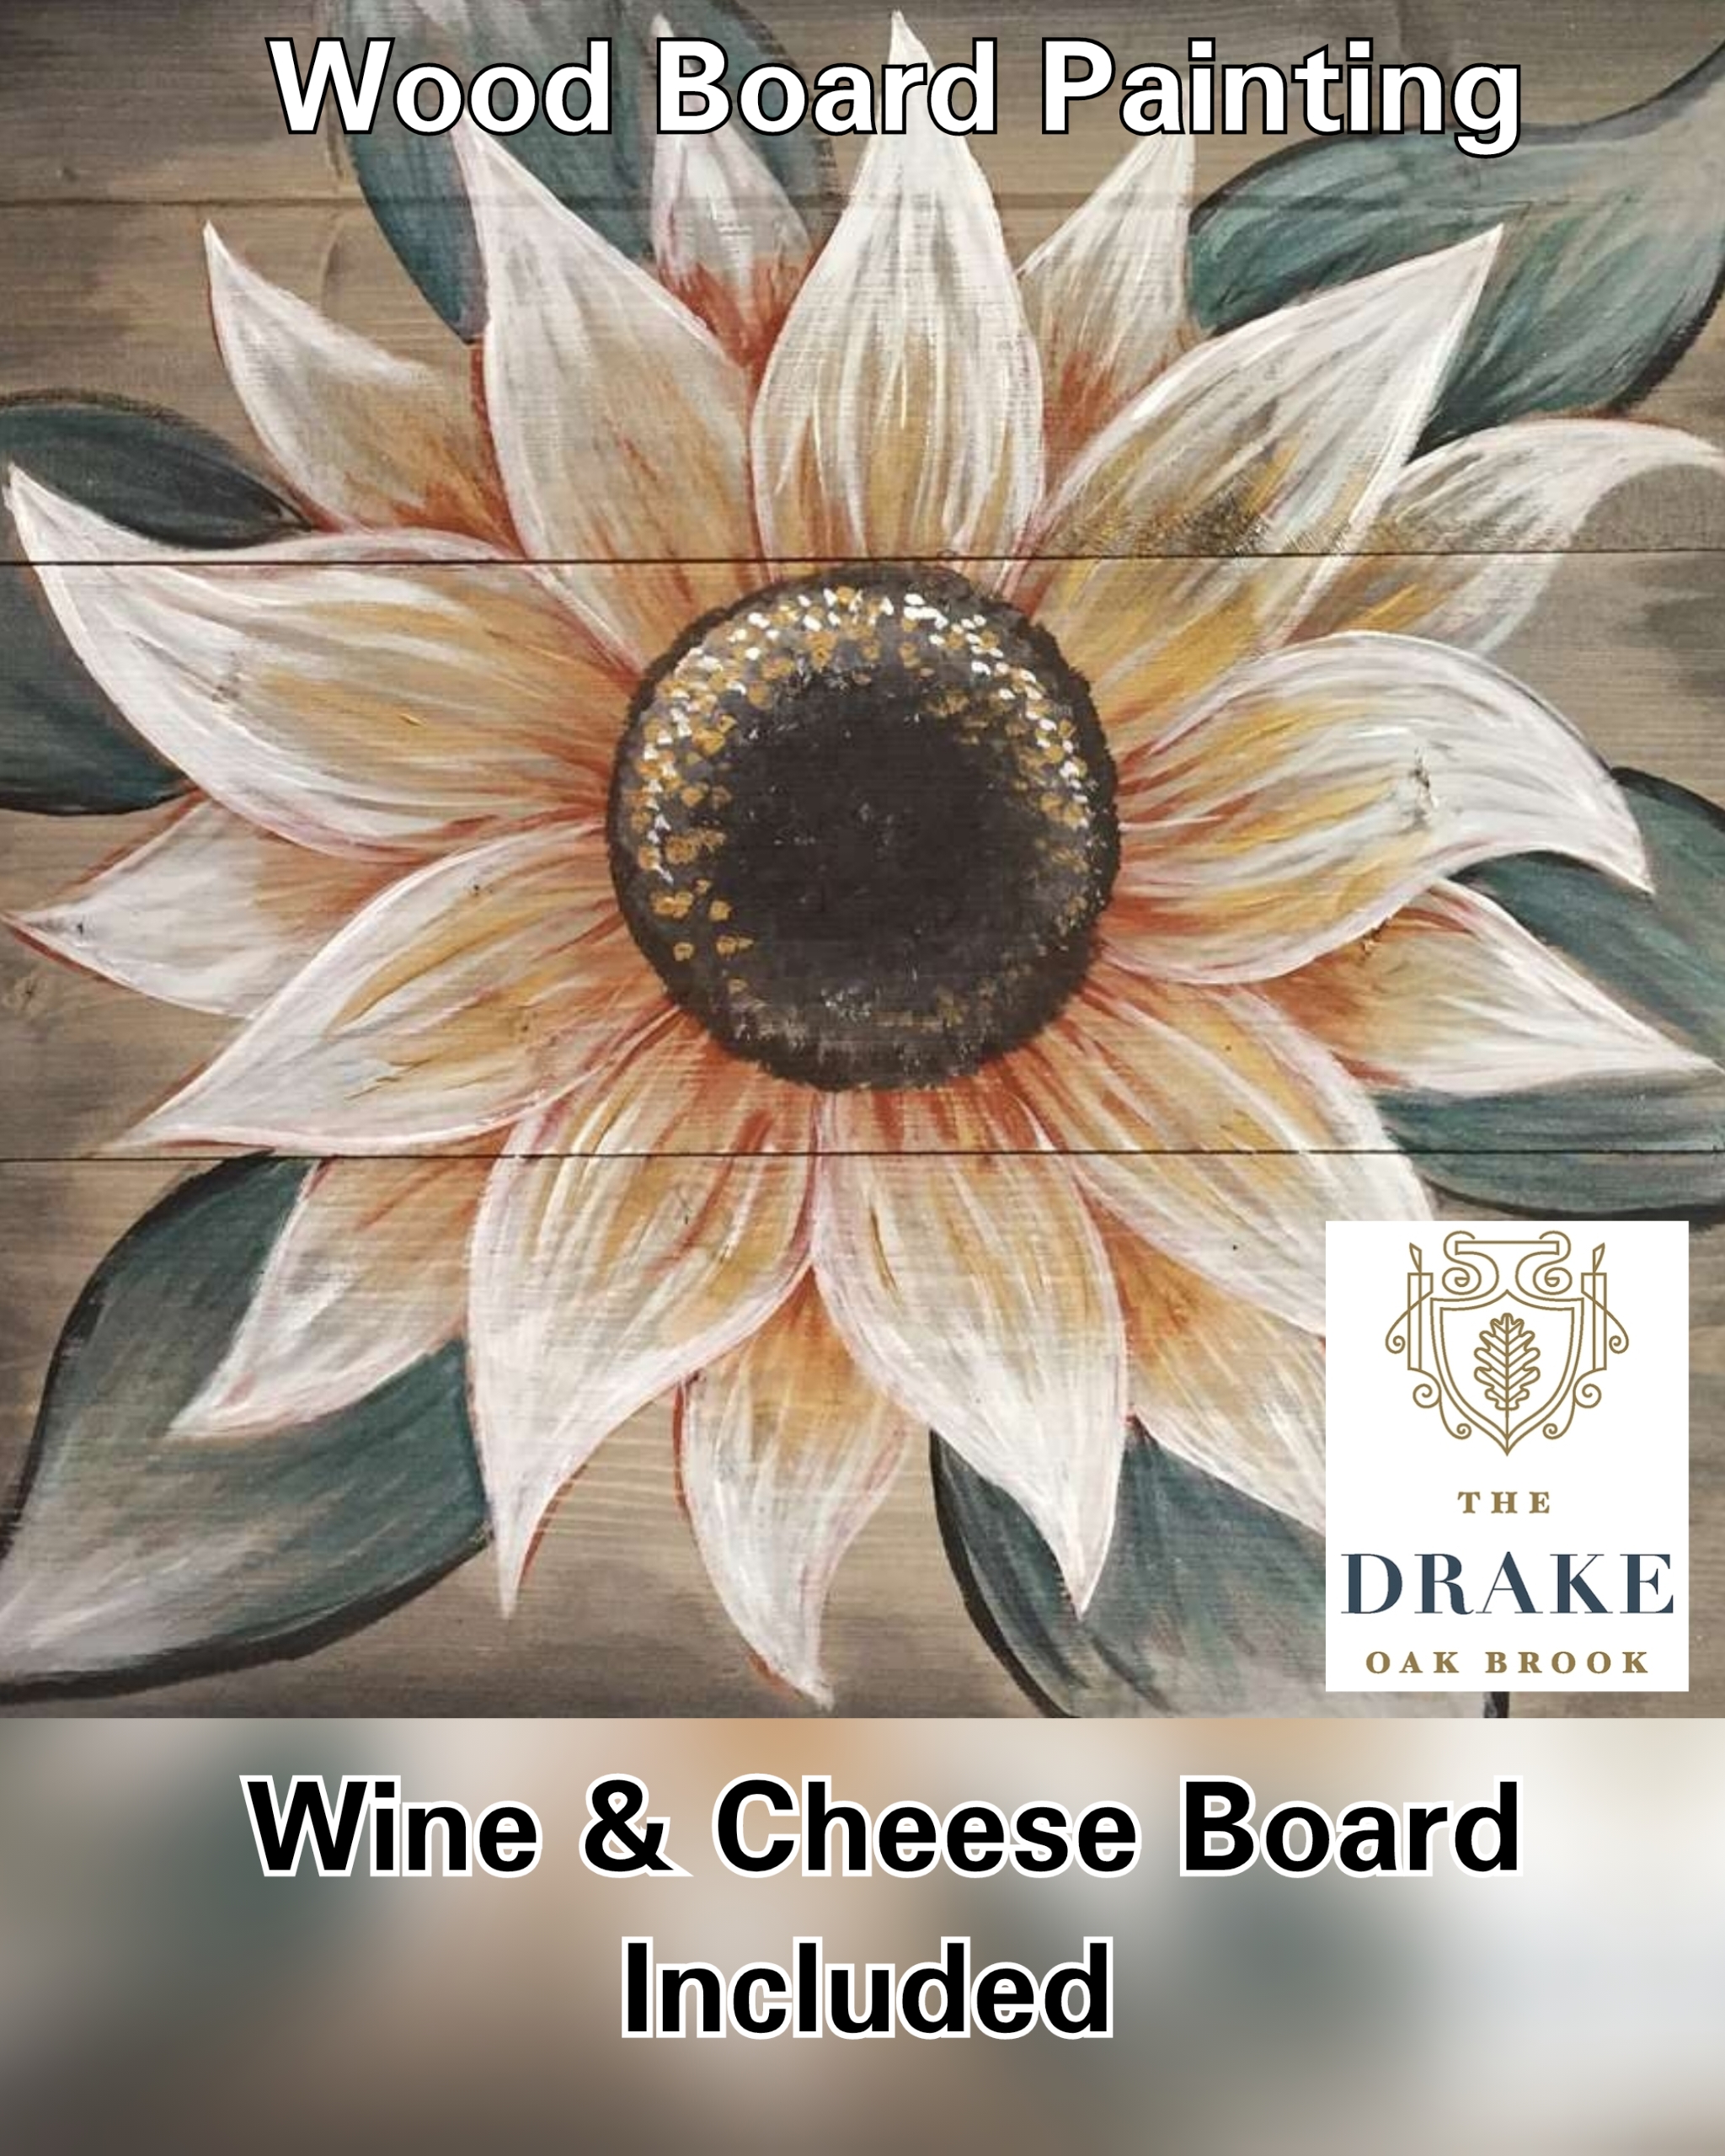 The Drake Oak Brook Wood Board Painting! 